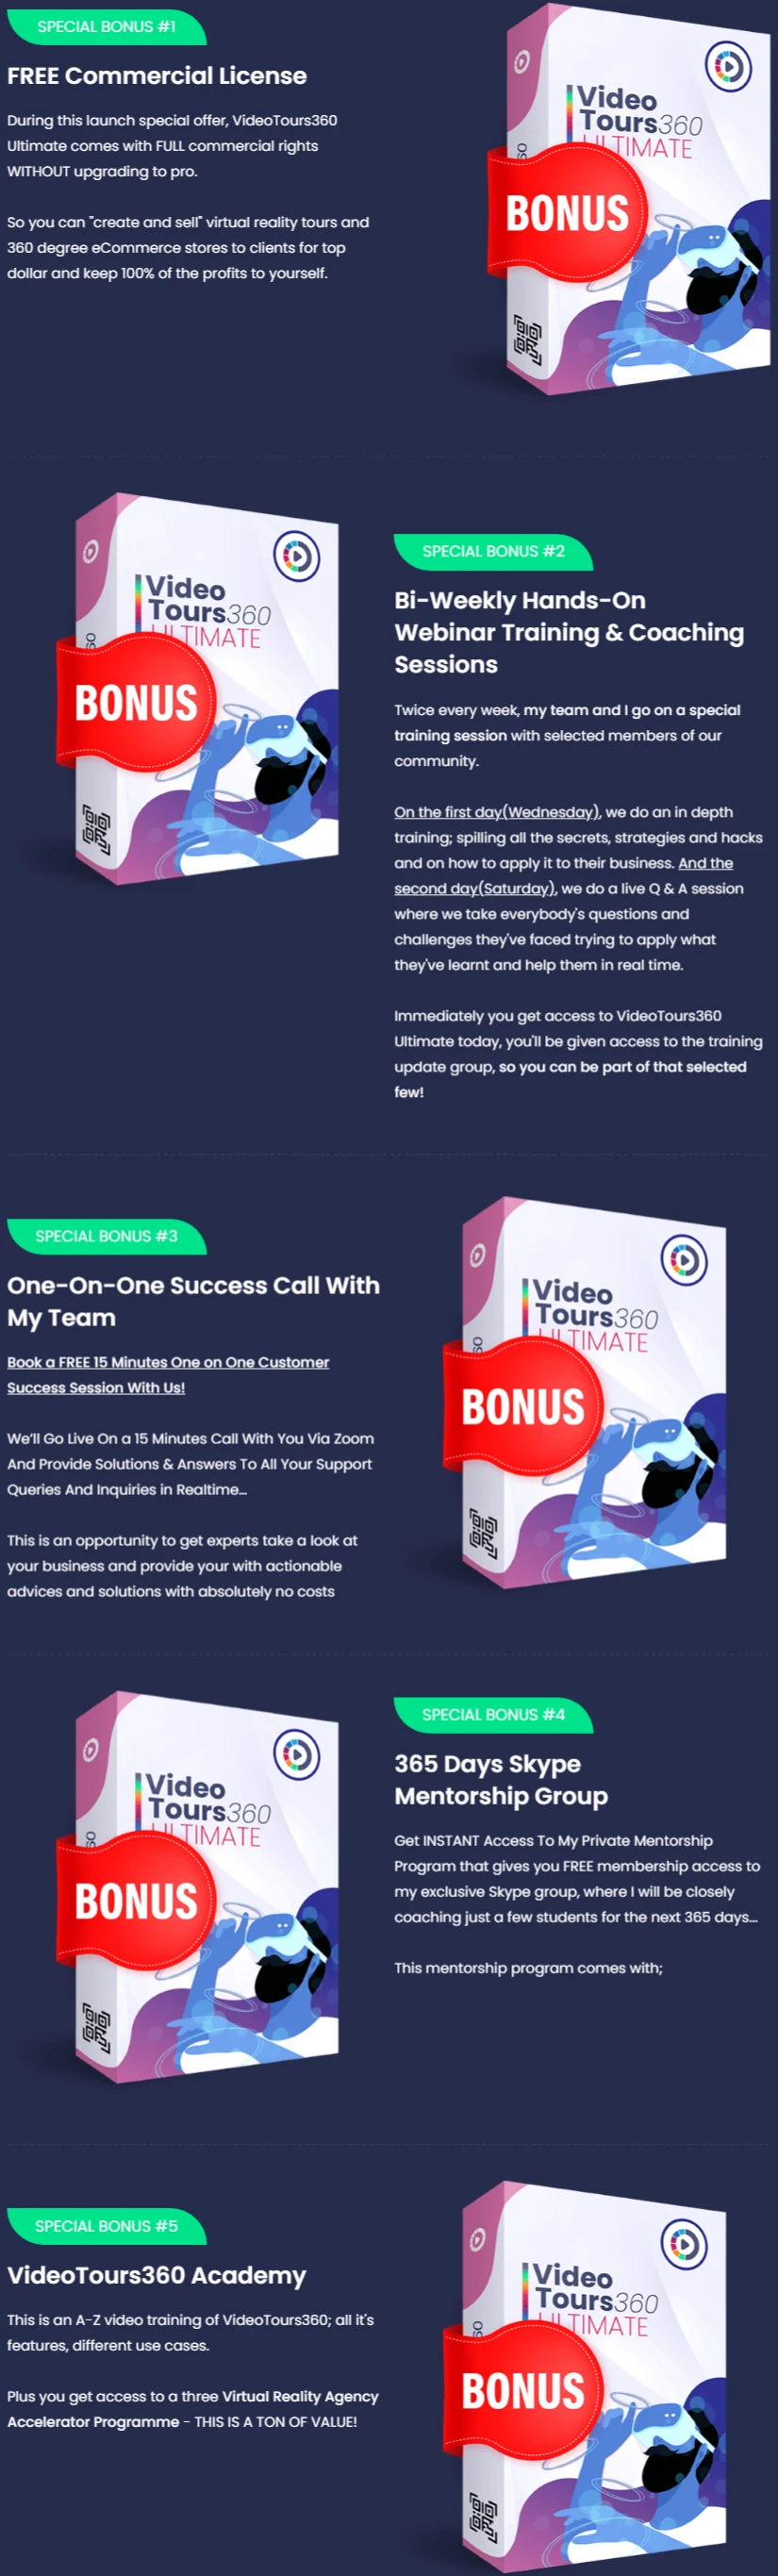 VideoTours360 Ultimate bonus